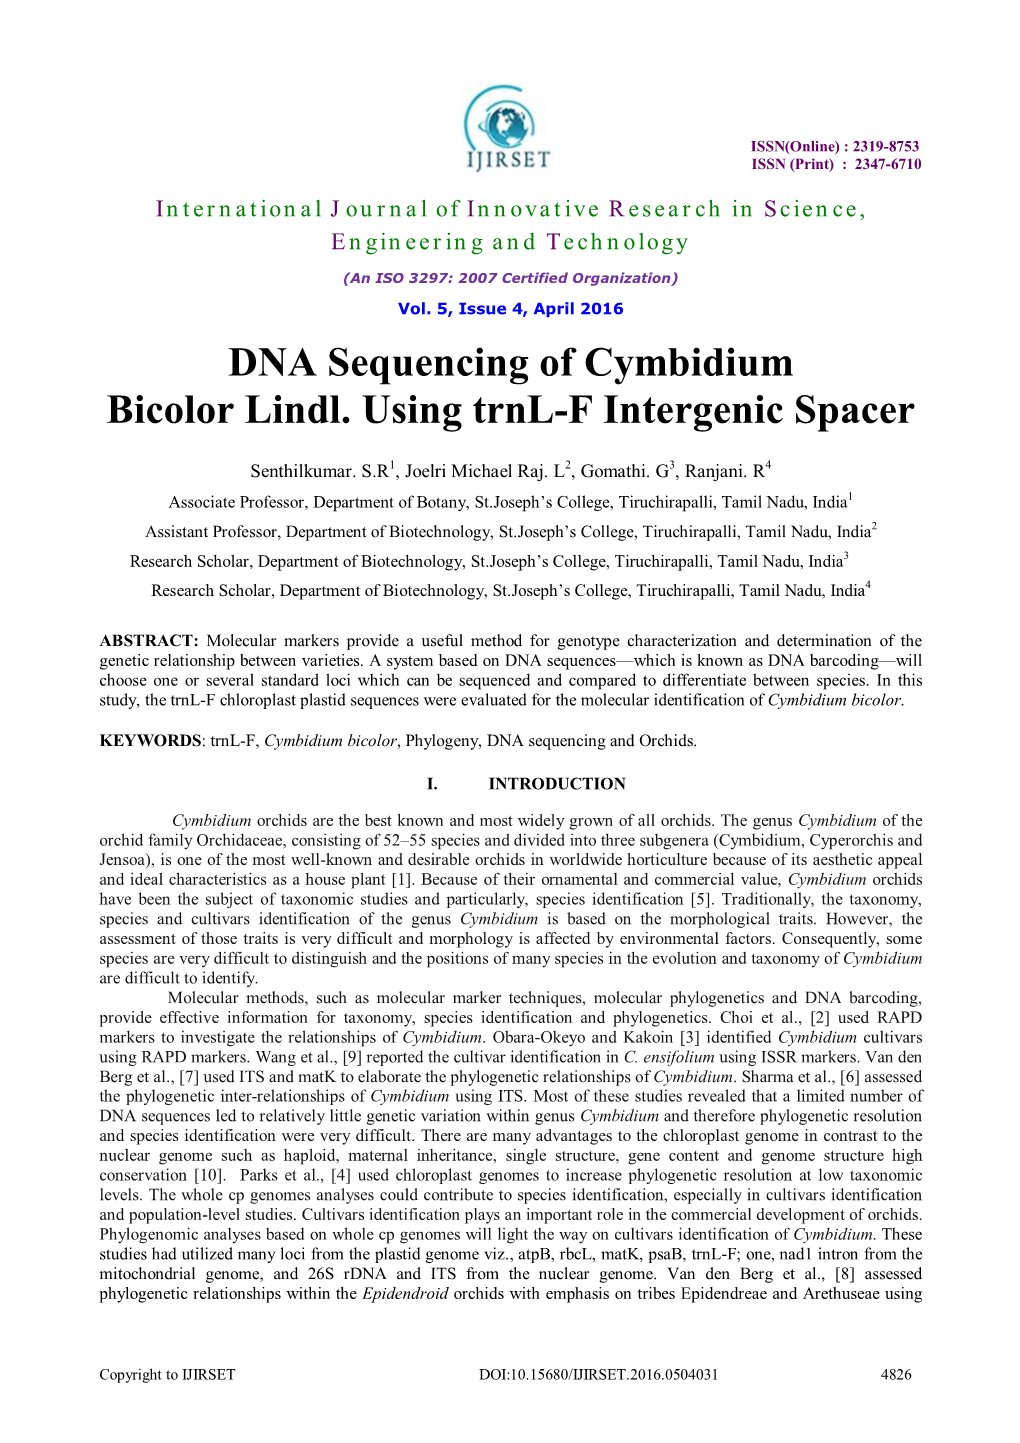 DNA Sequencing of Cymbidium Bicolor Lindl. Using Trnl-F Intergenic Spacer